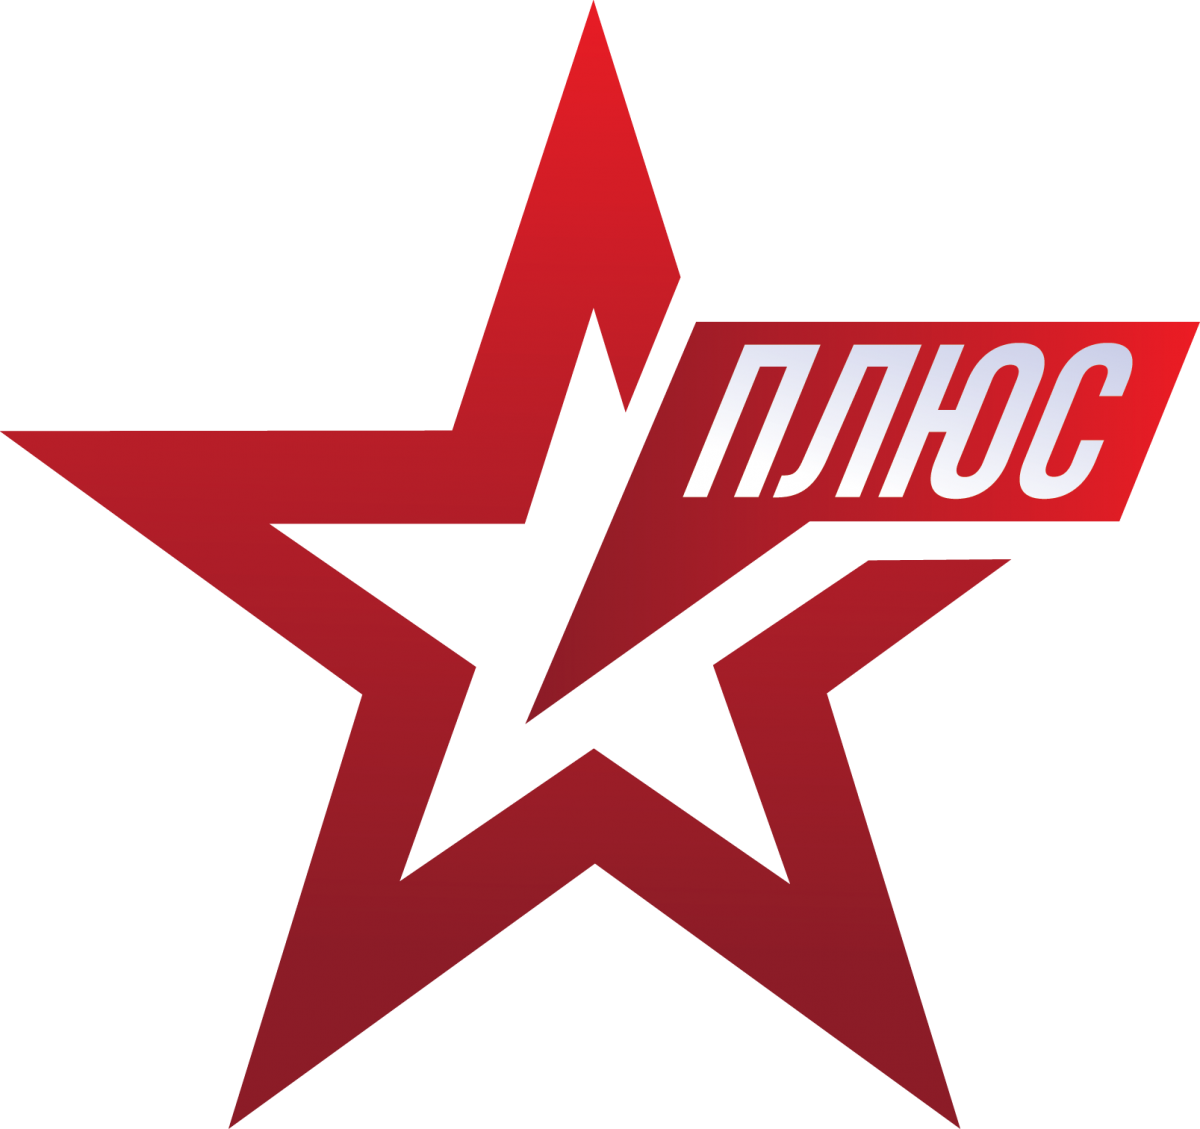 Новое телеканала звезда. Логотип канала звезда. Телеканал звезда logo. Логотип телеканала Звязда. Канал звезда плюс.